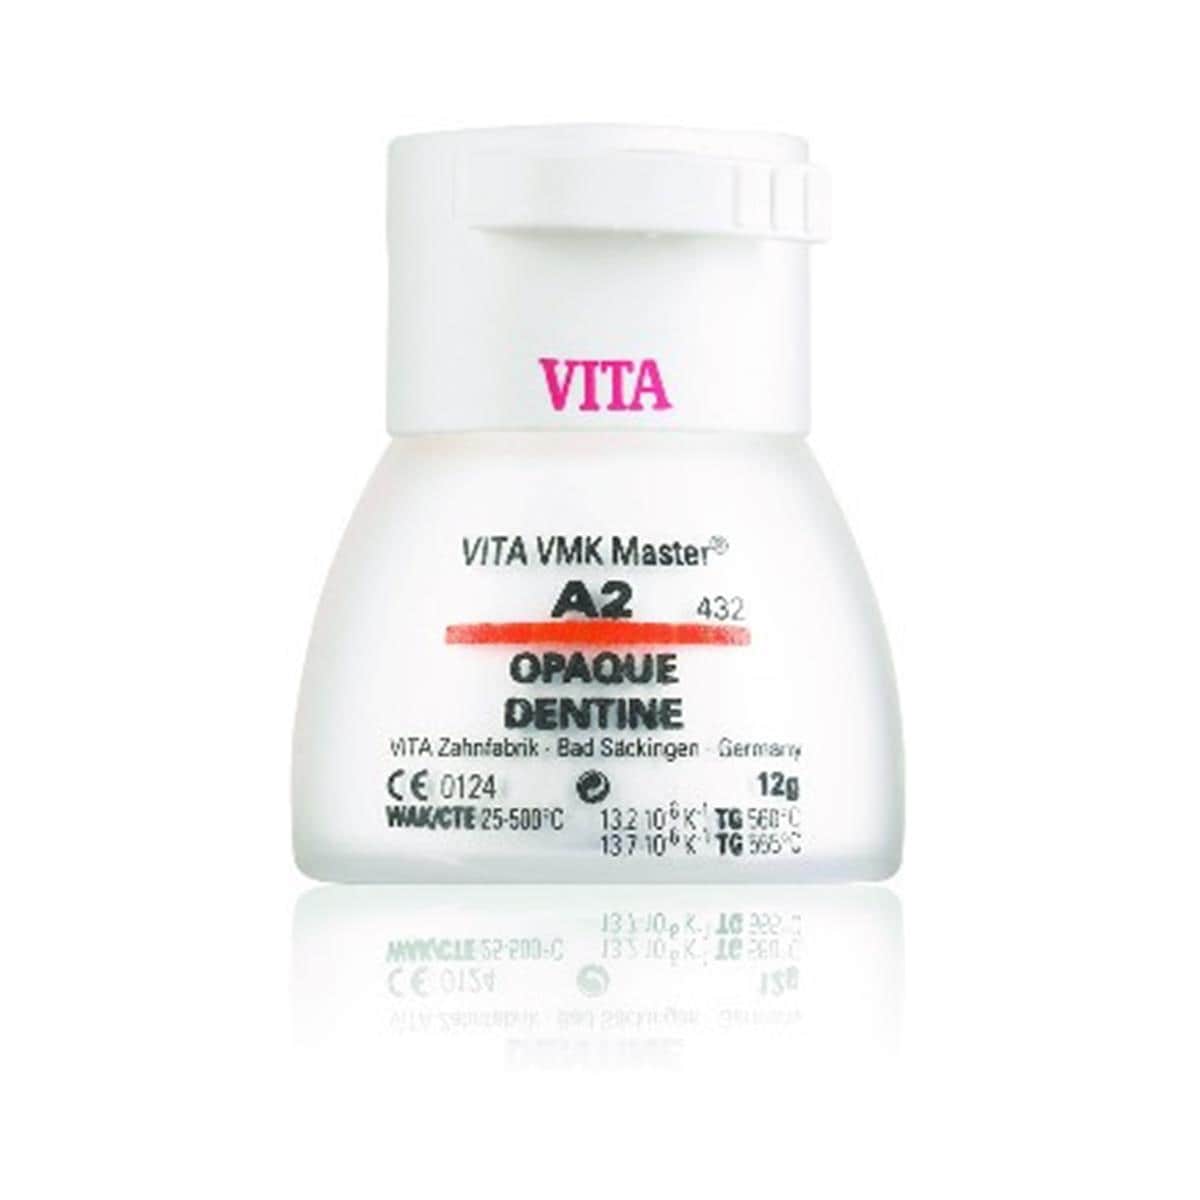 VMK Master VITA - Dentine Opaque - B2 - Le flacon de 12 g